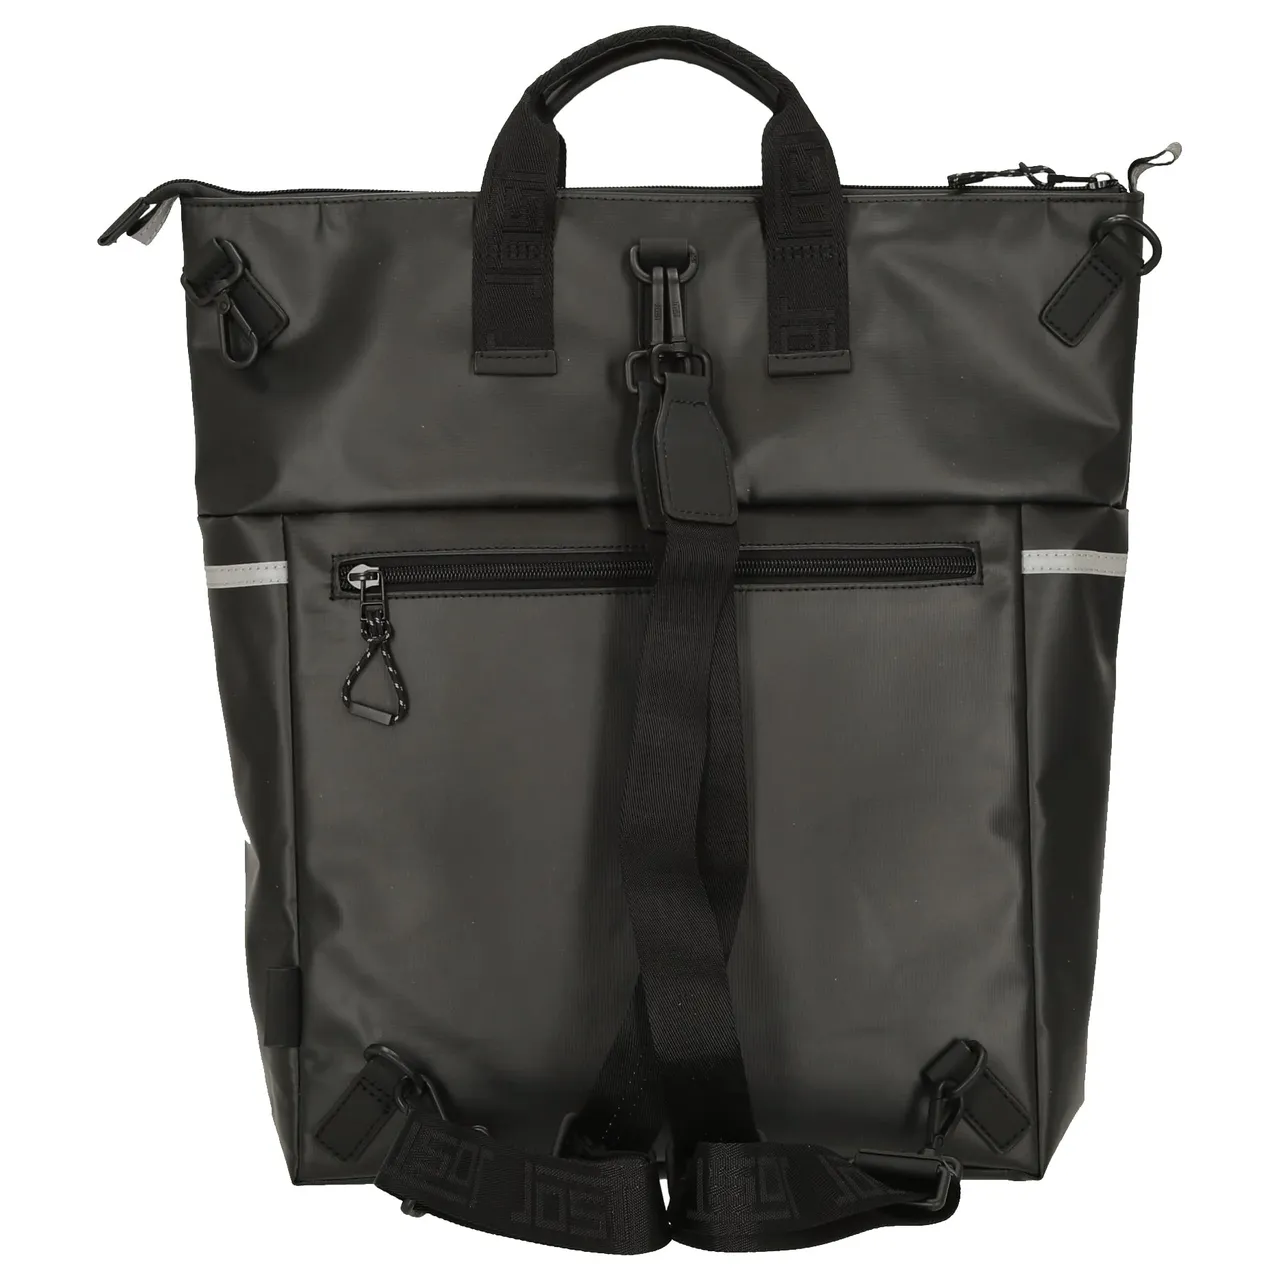 Handtaschen schwarz Tolja II -